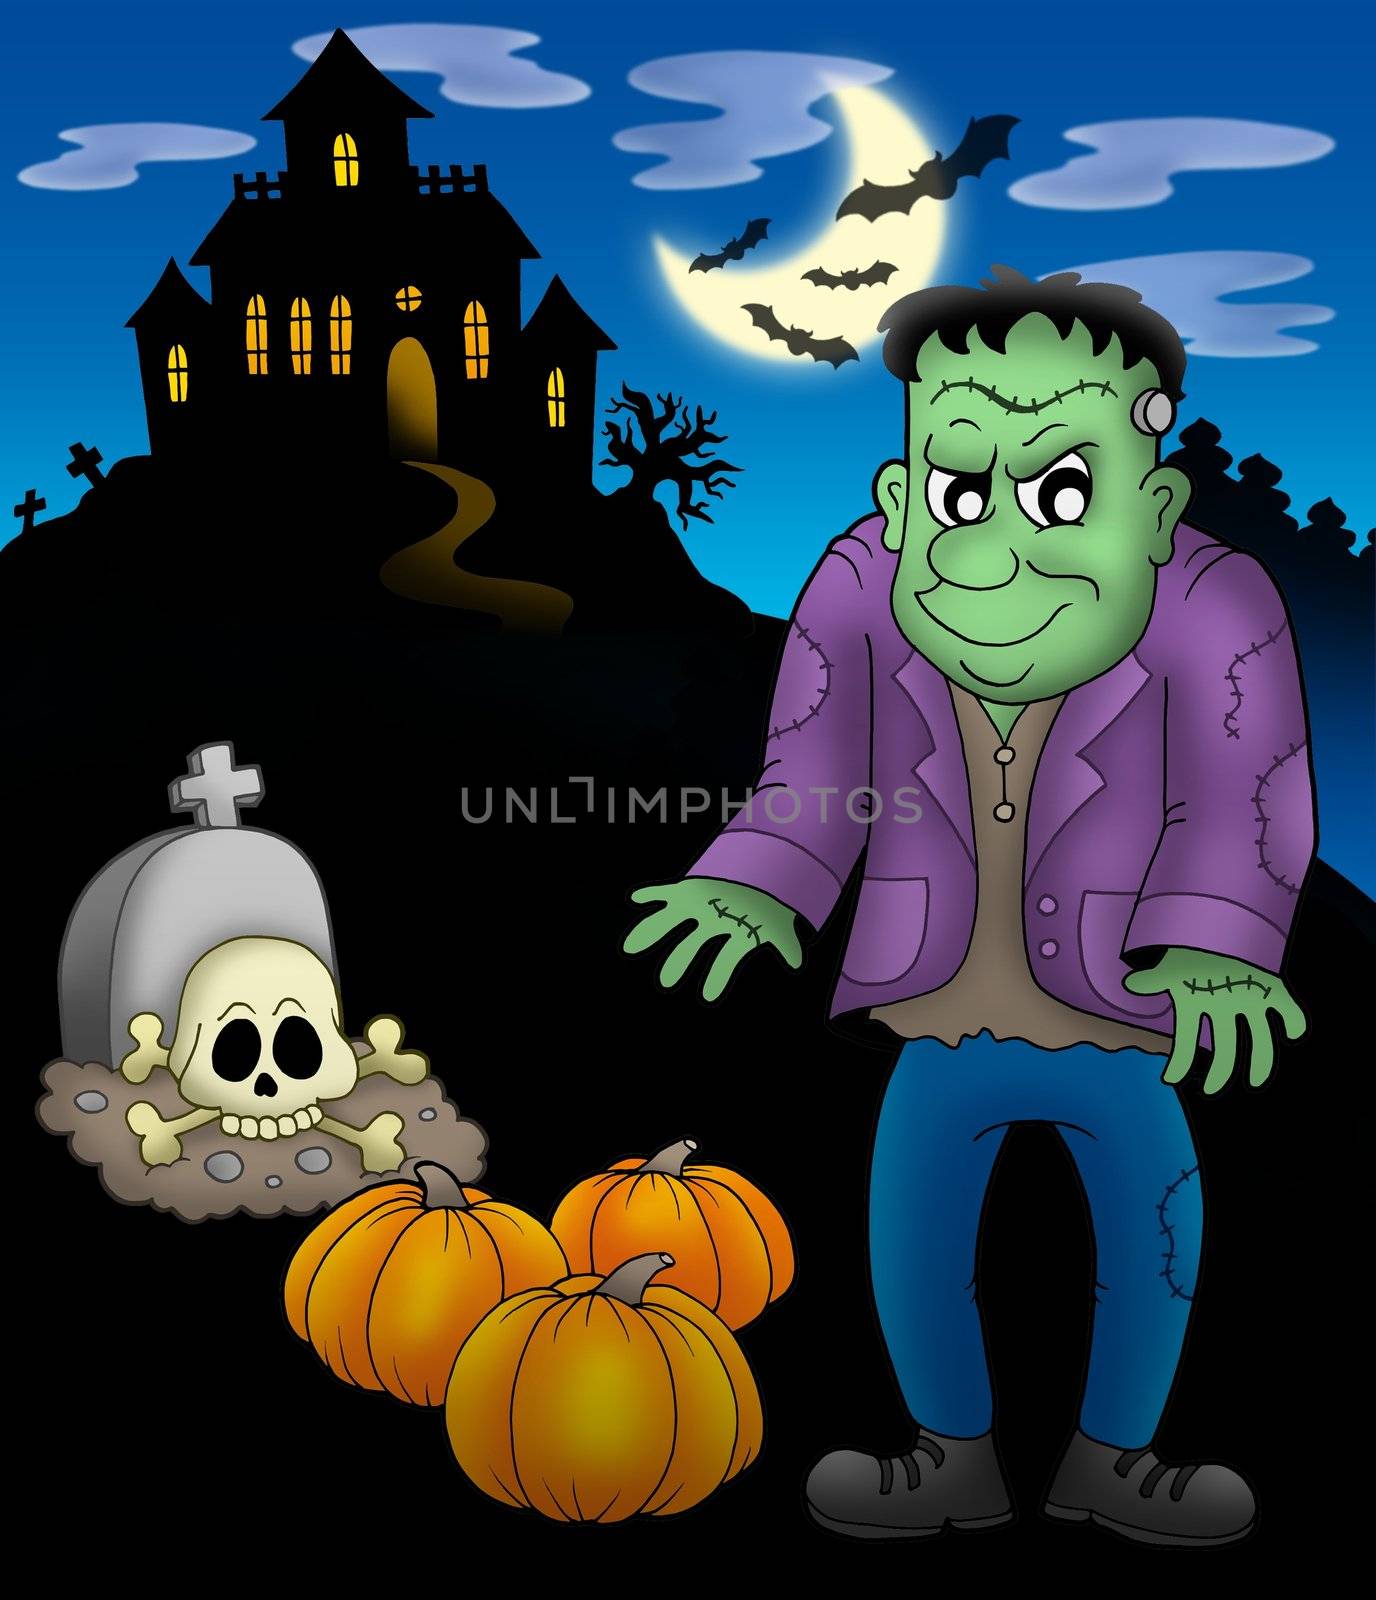 Frankenstein with haunted mansion - color illustration.